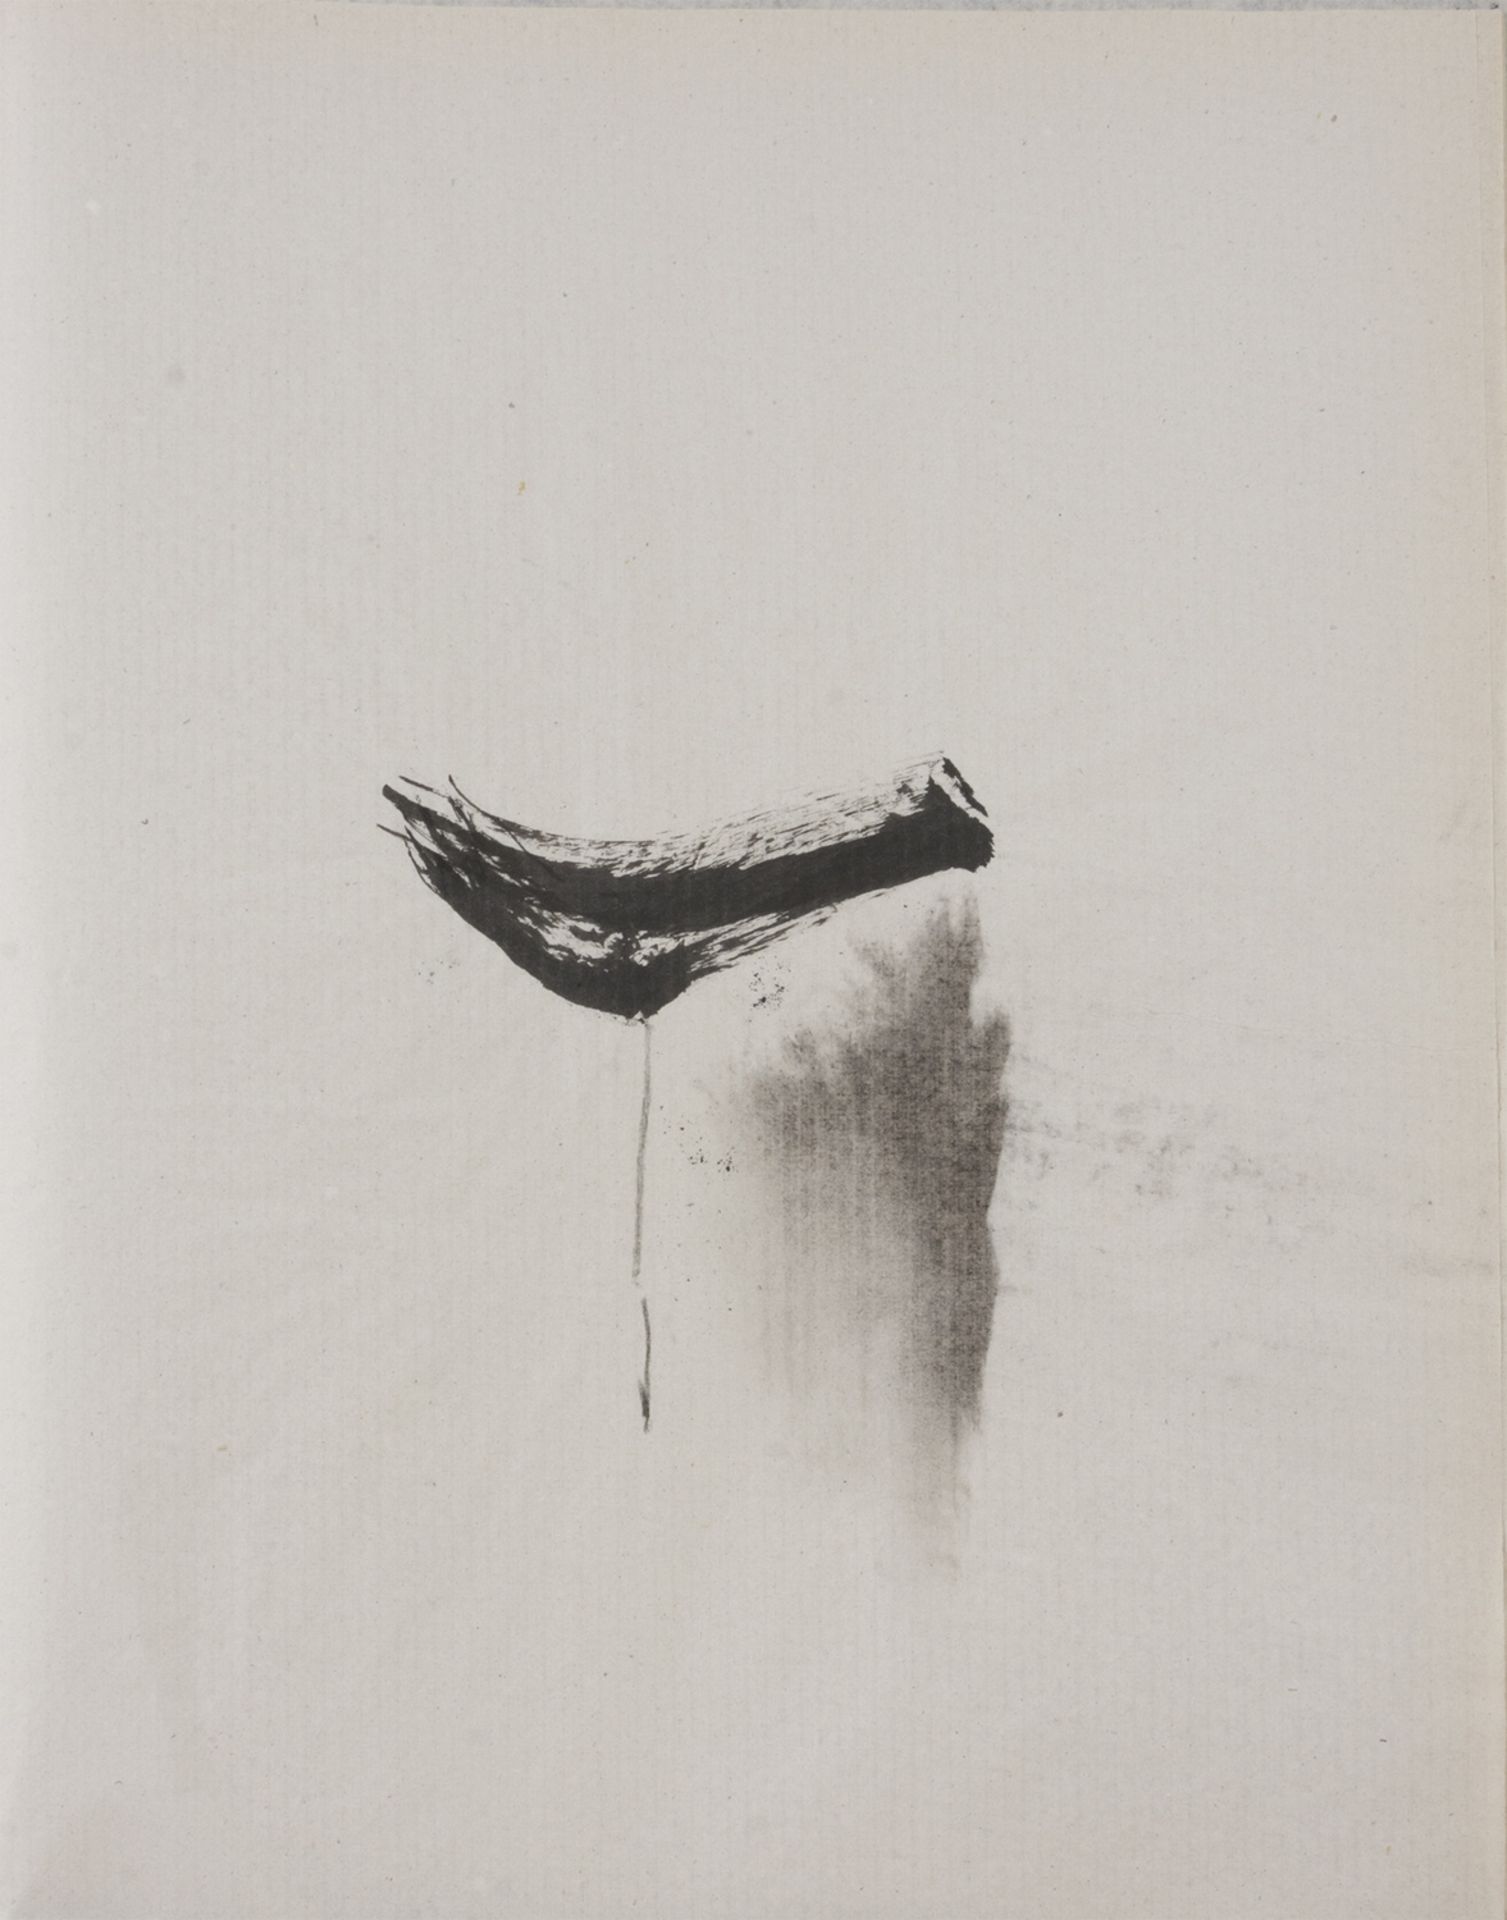 TWENTY INK DRAWINGS BY WANG HONG SHU IN FOLDER - Image 11 of 22